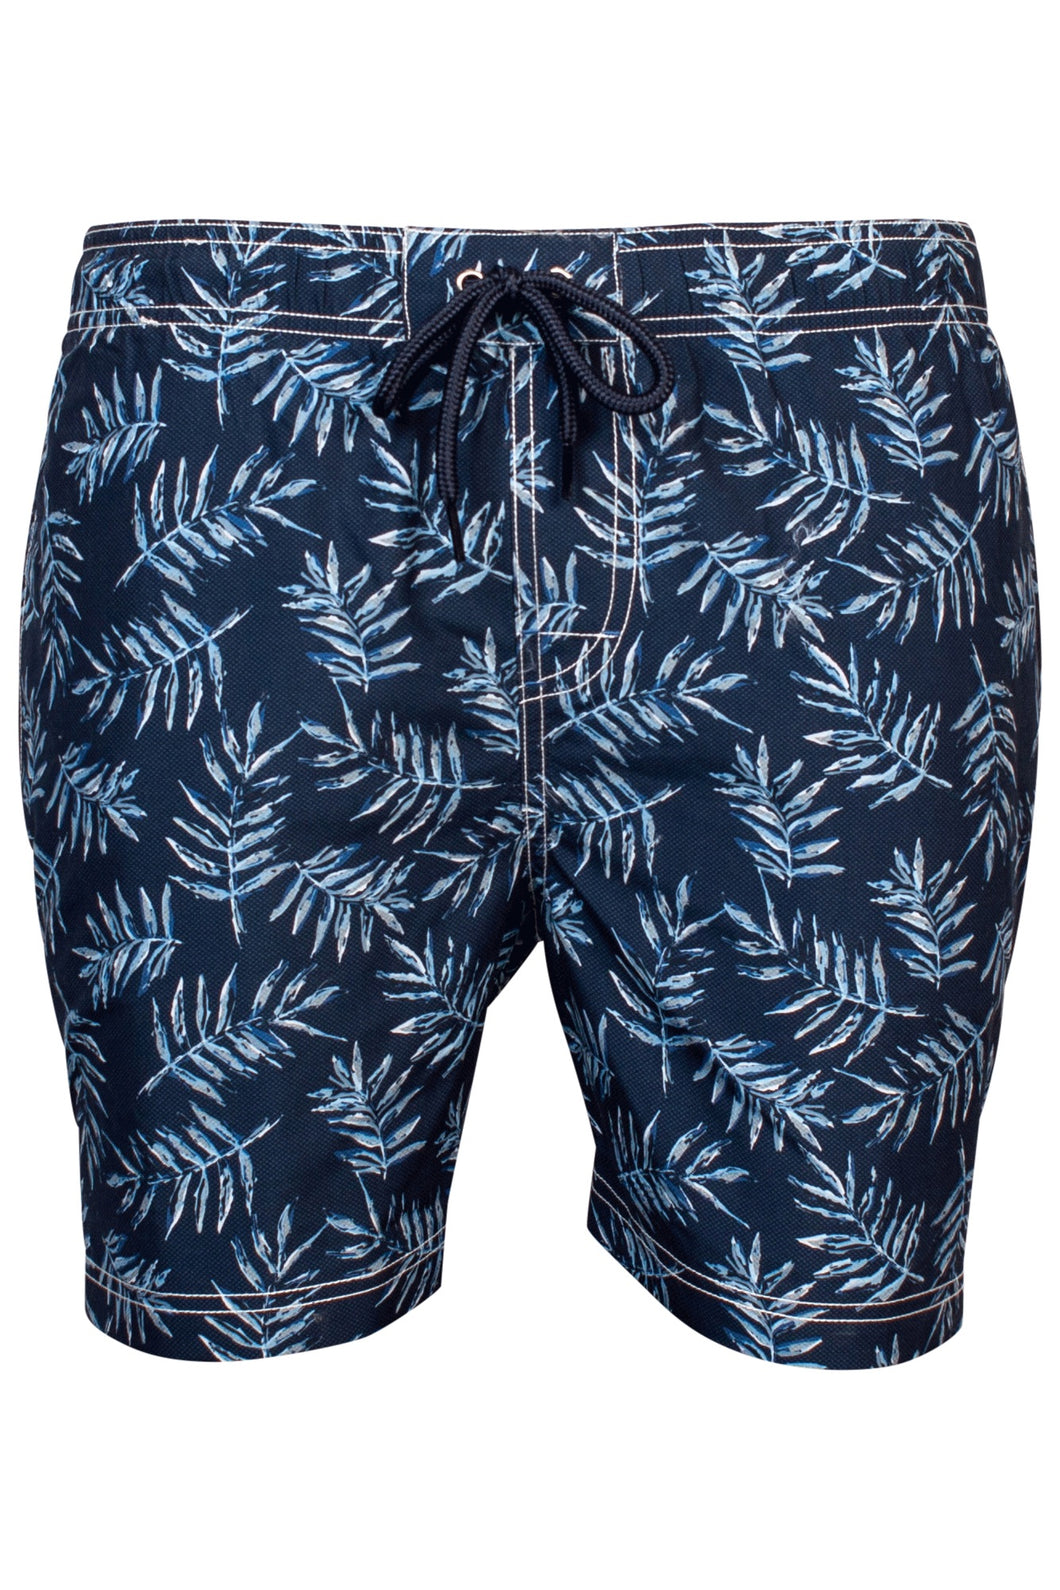 Baileys Navy Swim Shorts